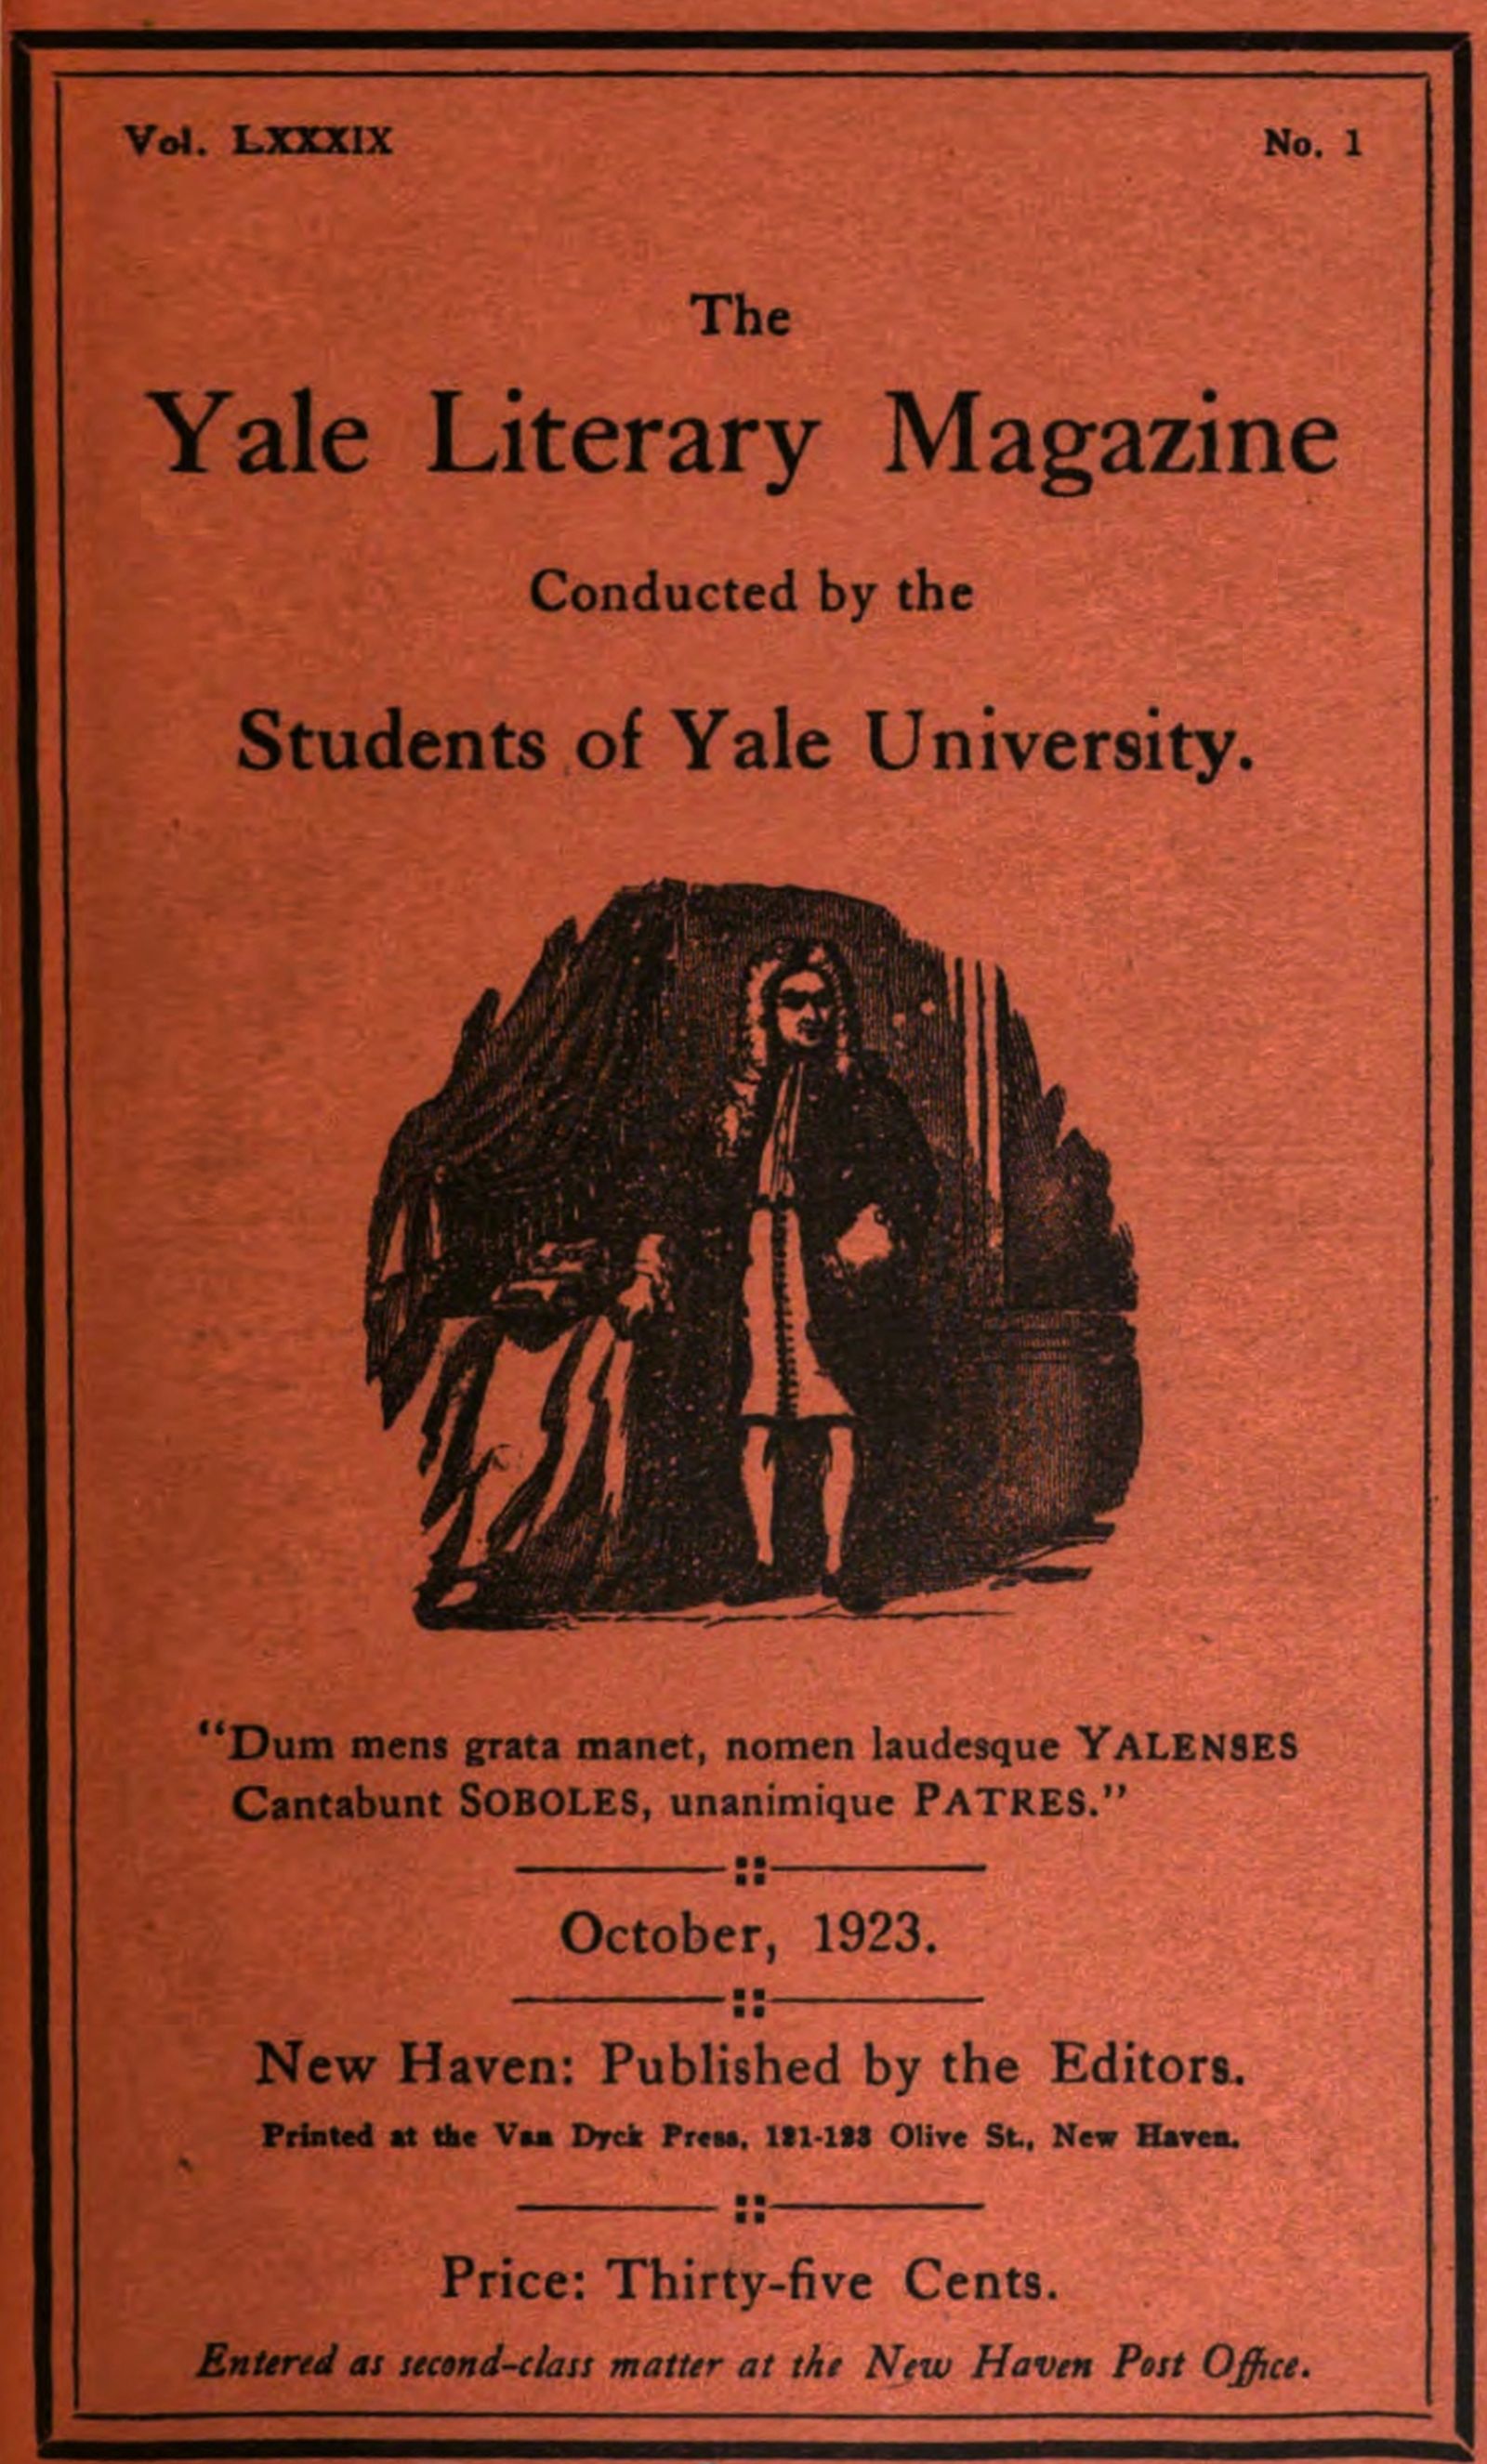 The Yale Literary Magazine (Vol. LXXXIX, No. 1, 1923)